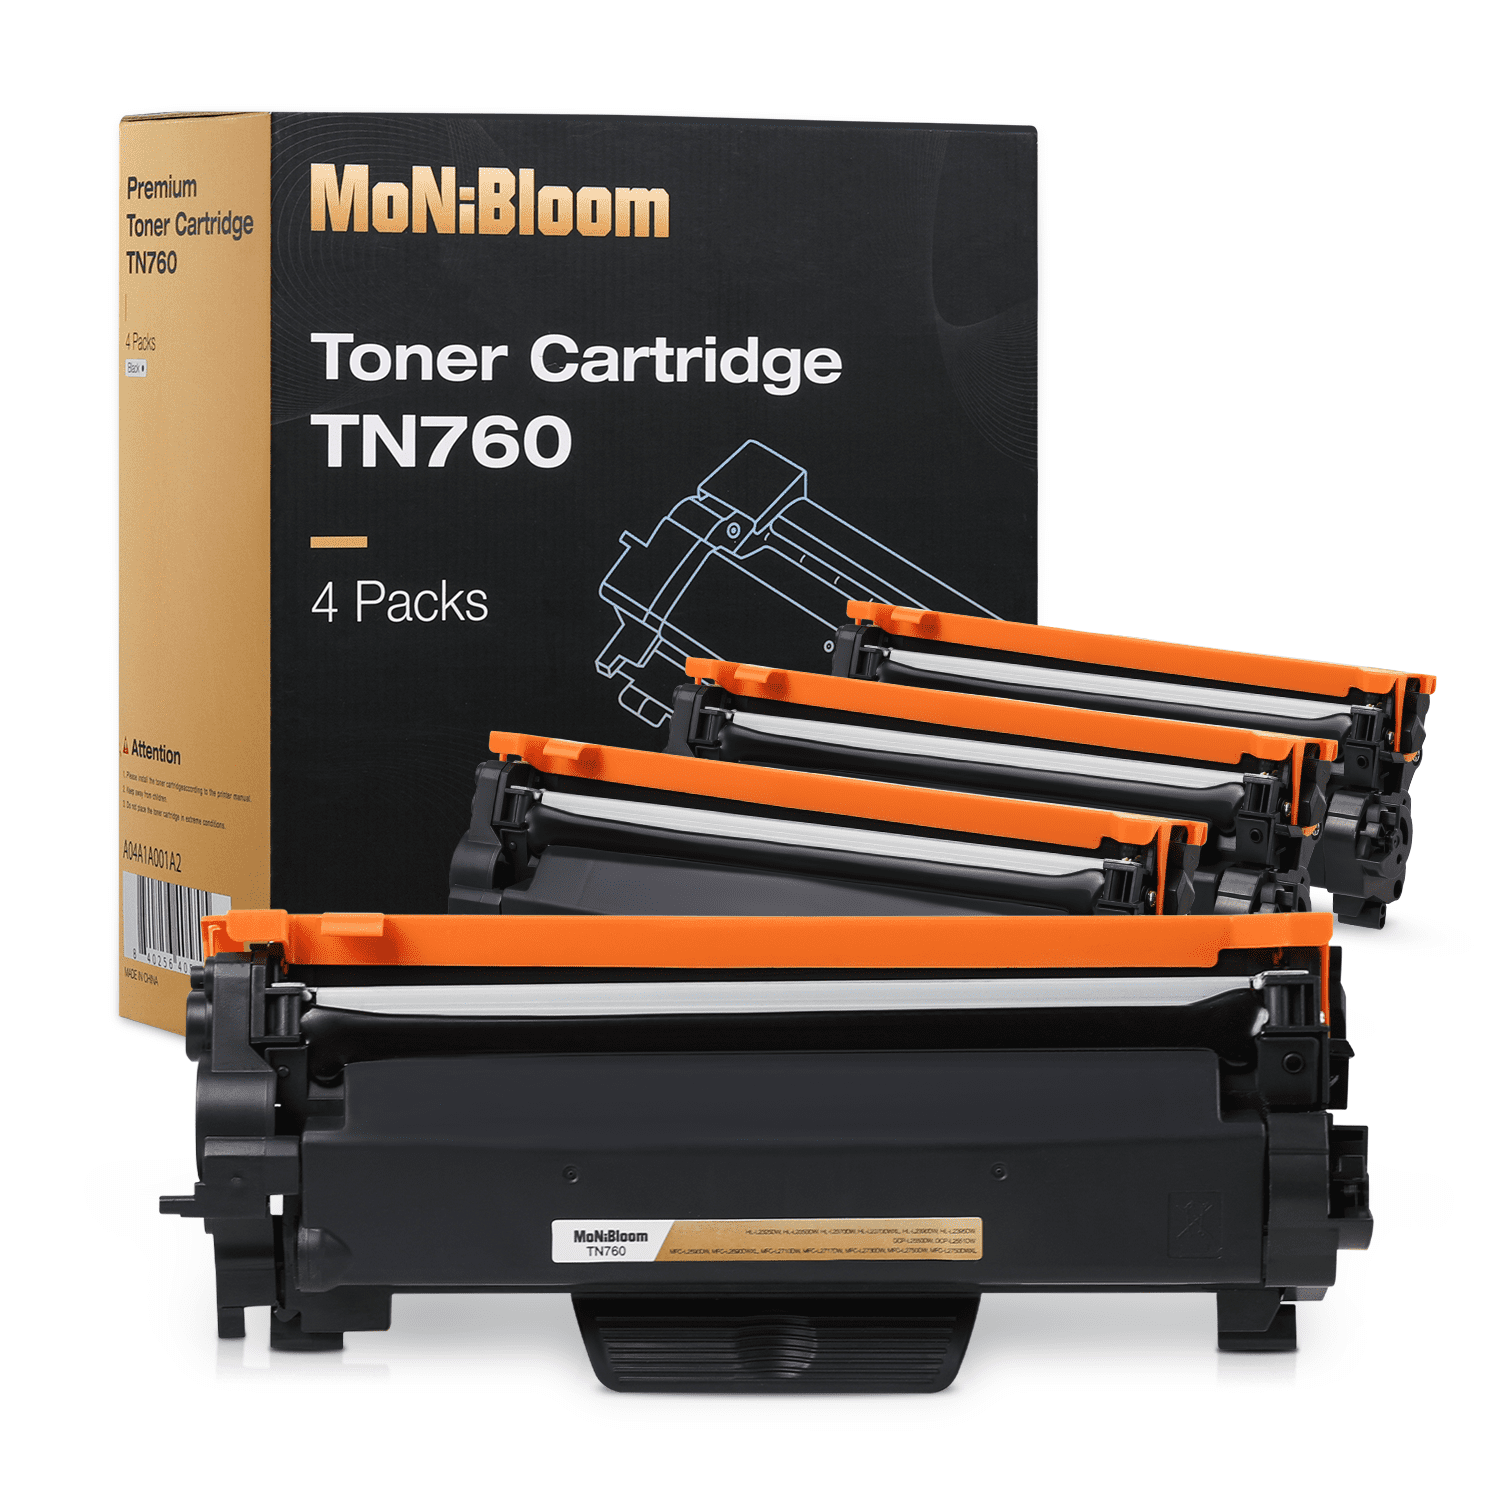 Compatible Toner Cartridge Replacement for Brother TN760 TN730, 4 Packs, DCP-L2550DW DCP-L2551DW HL-L2350DW MFC-L2690DWXL Black Toner - Walmart.com